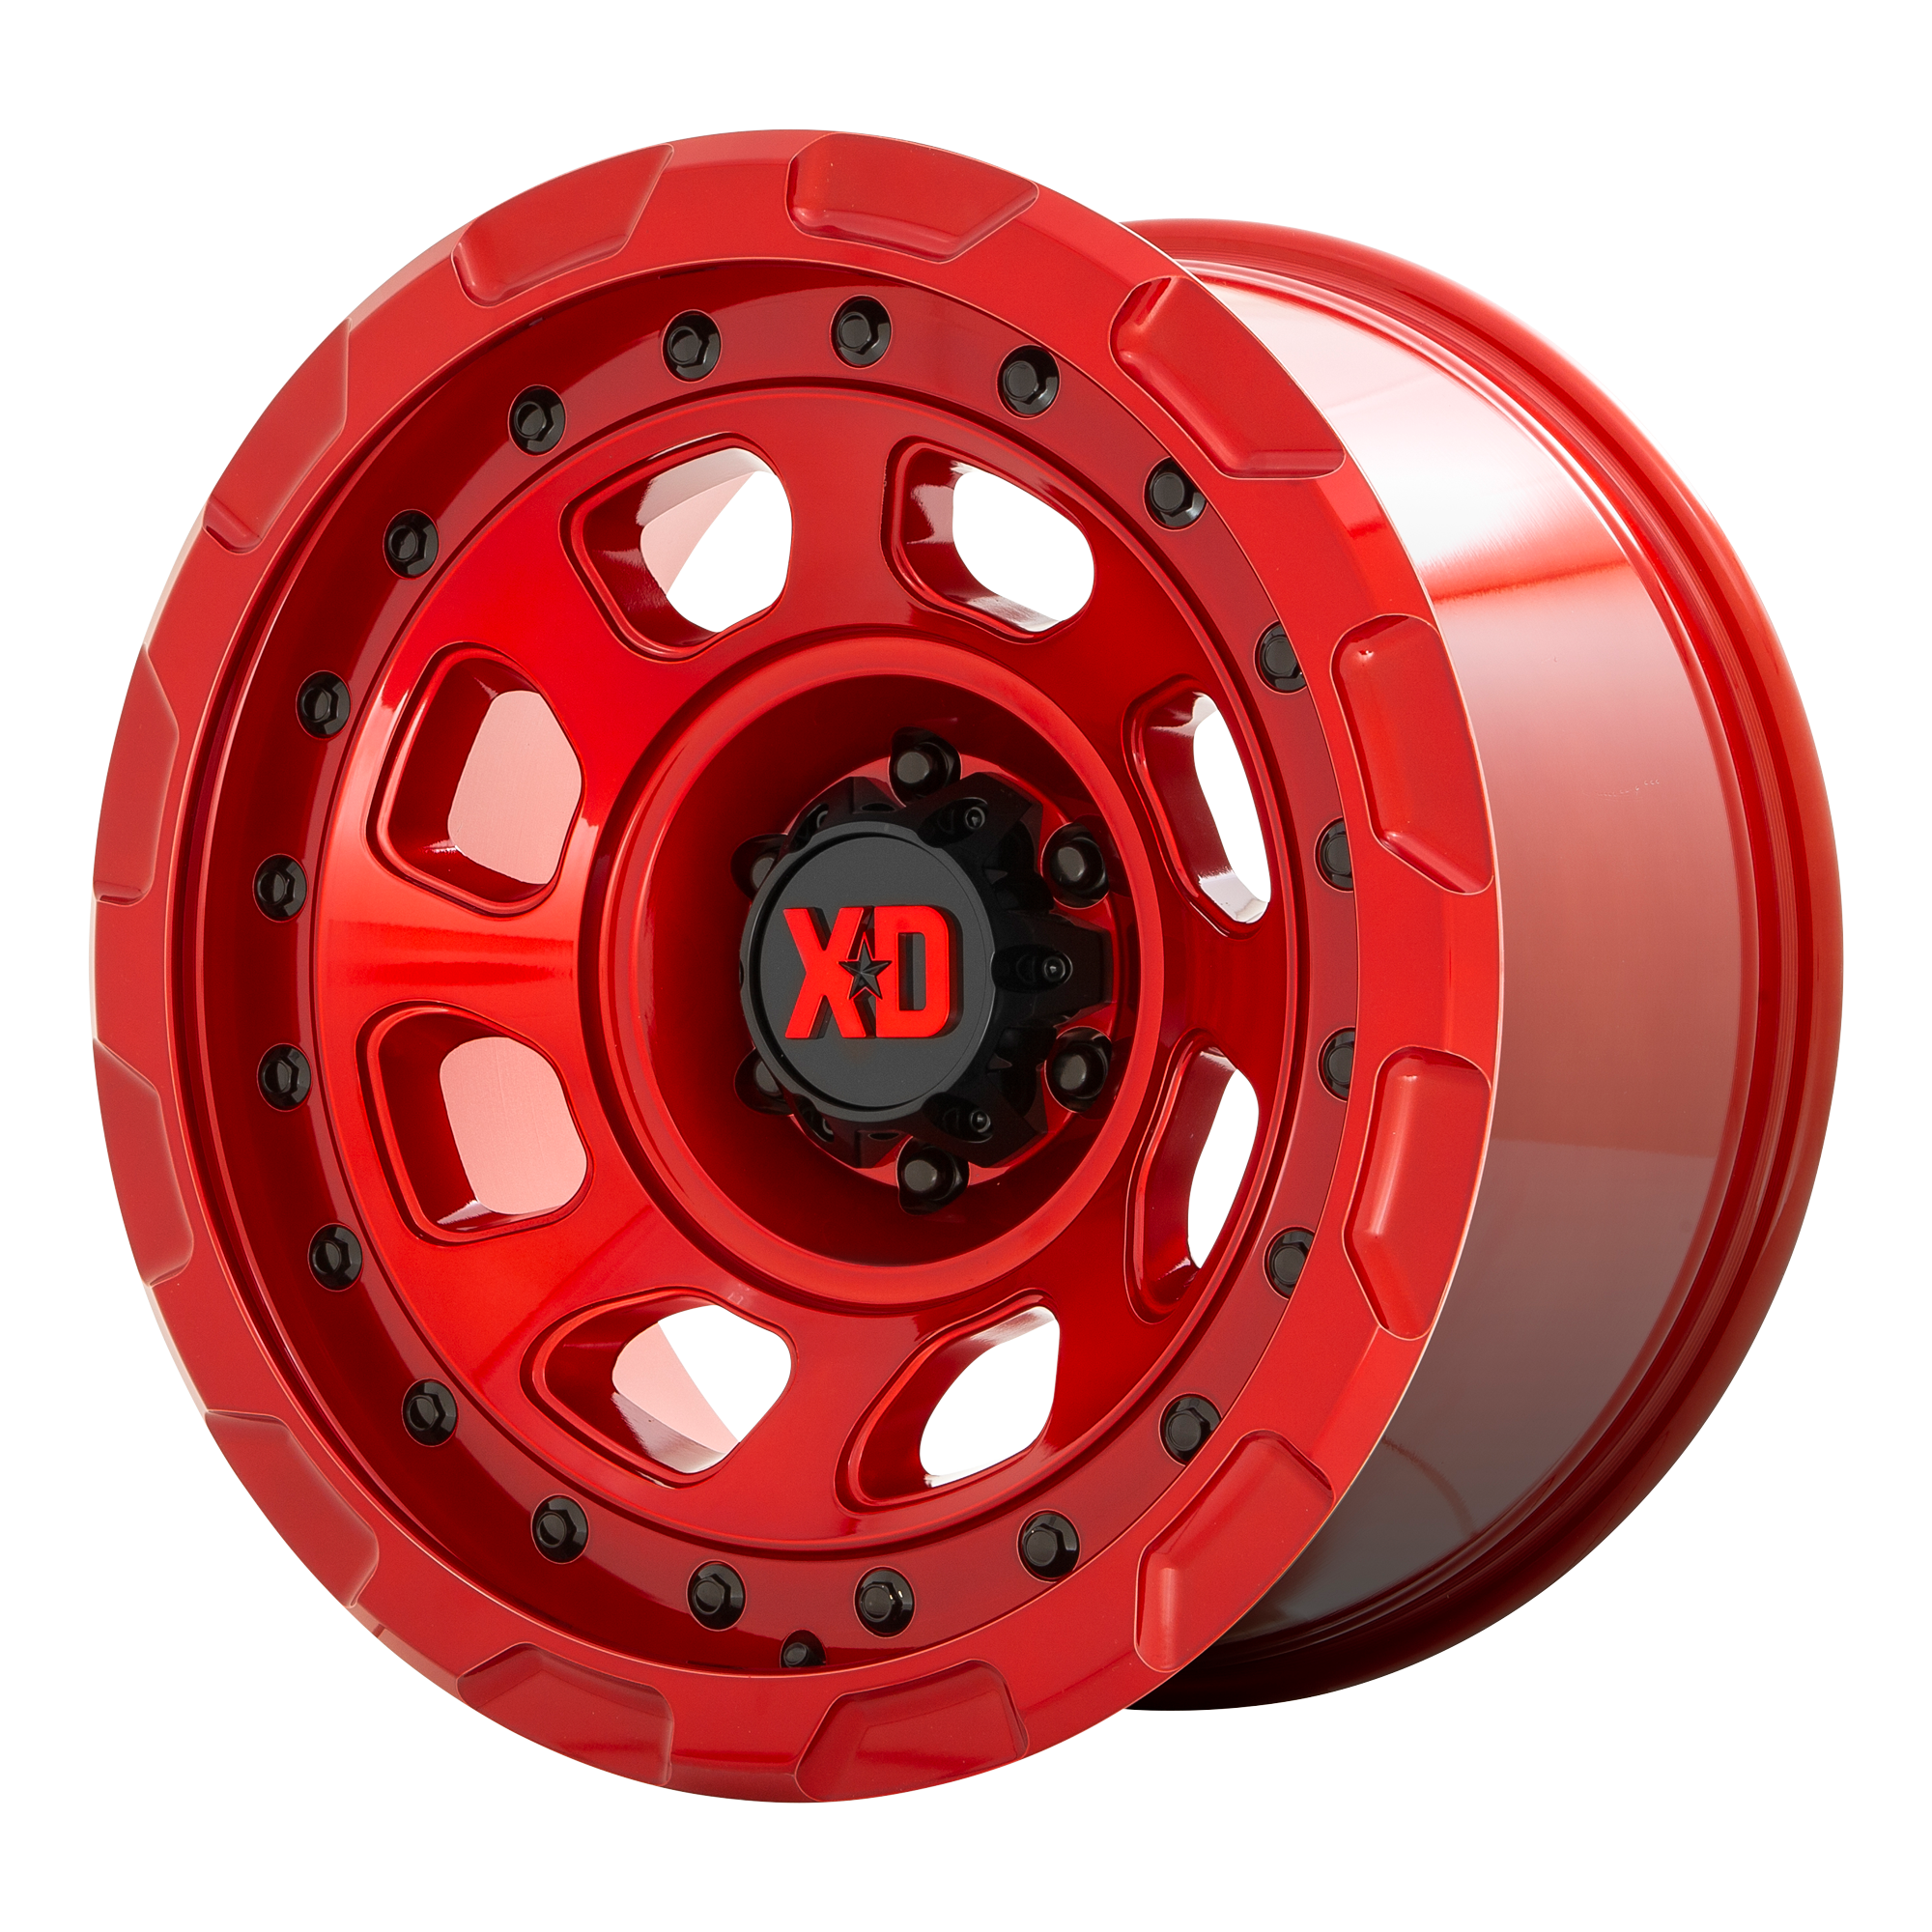 XD 17"x9" Non-Chrome Candy Red Custom Wheel ARSWCWXD86179050900